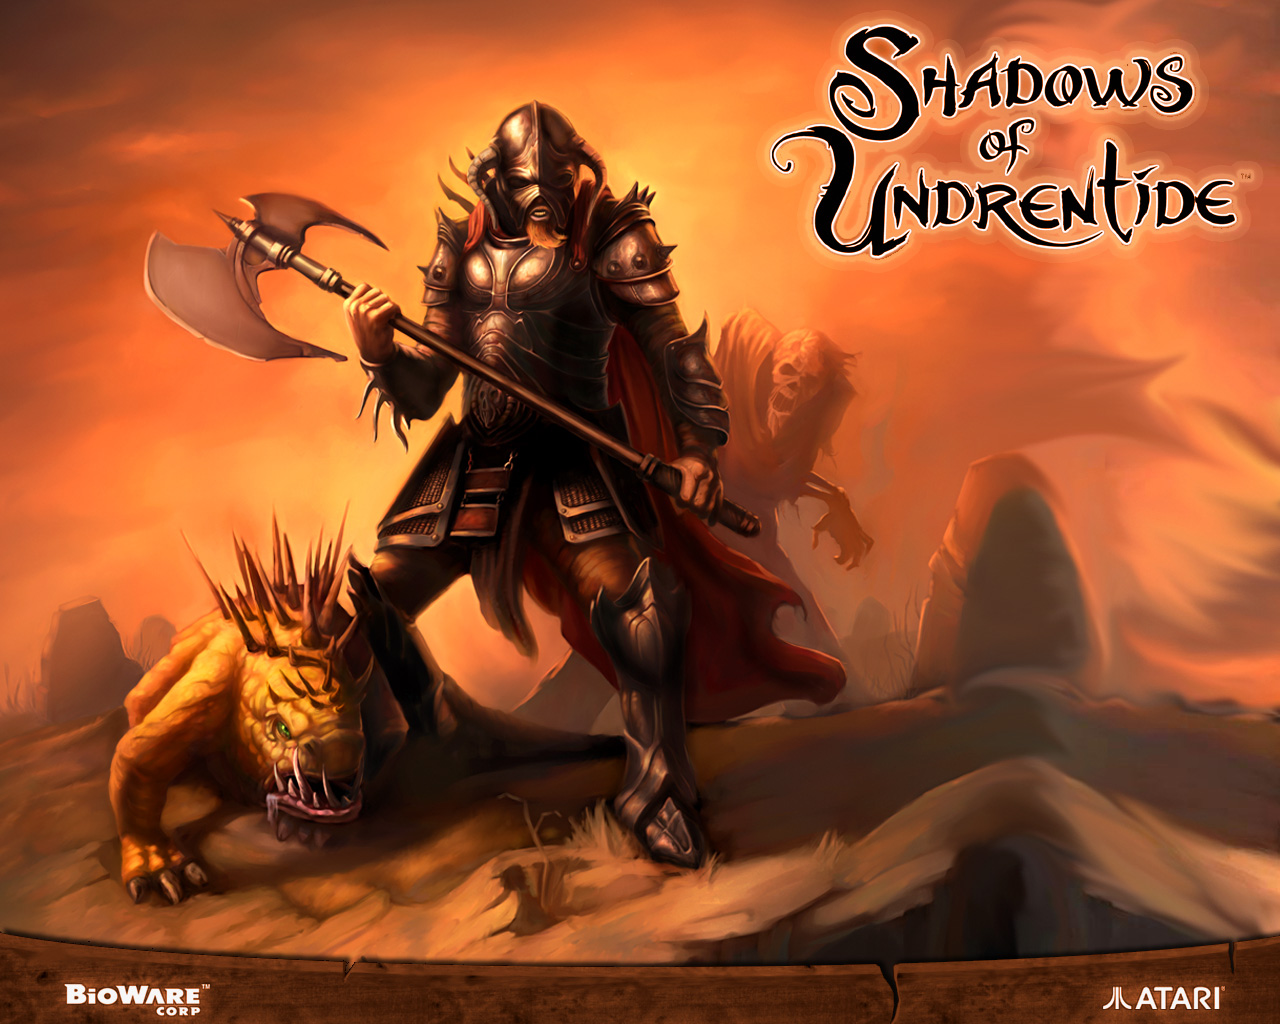    Neverwinter Nights: Shadows of Undrentide